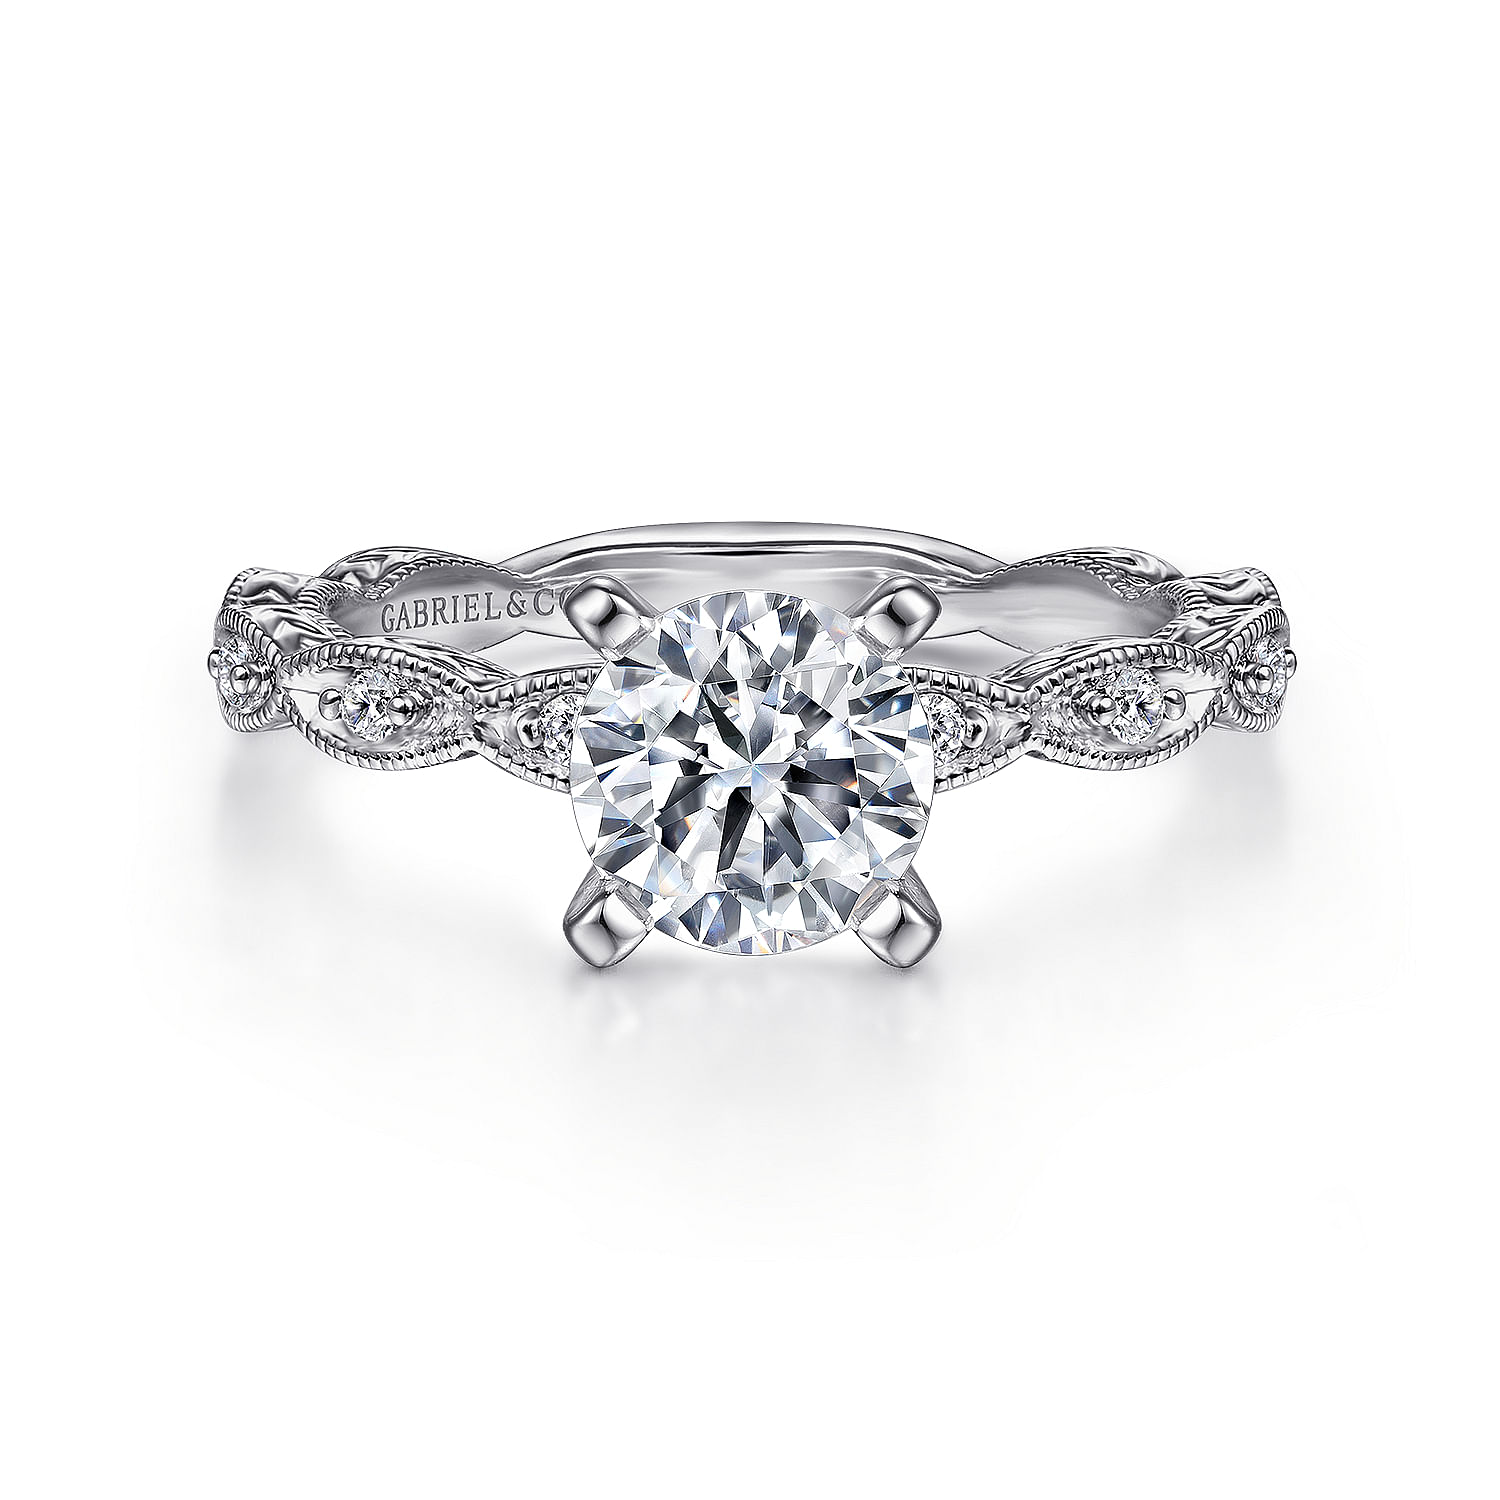 Sadie---Platinum-Round-Diamond-Engagement-Ring1